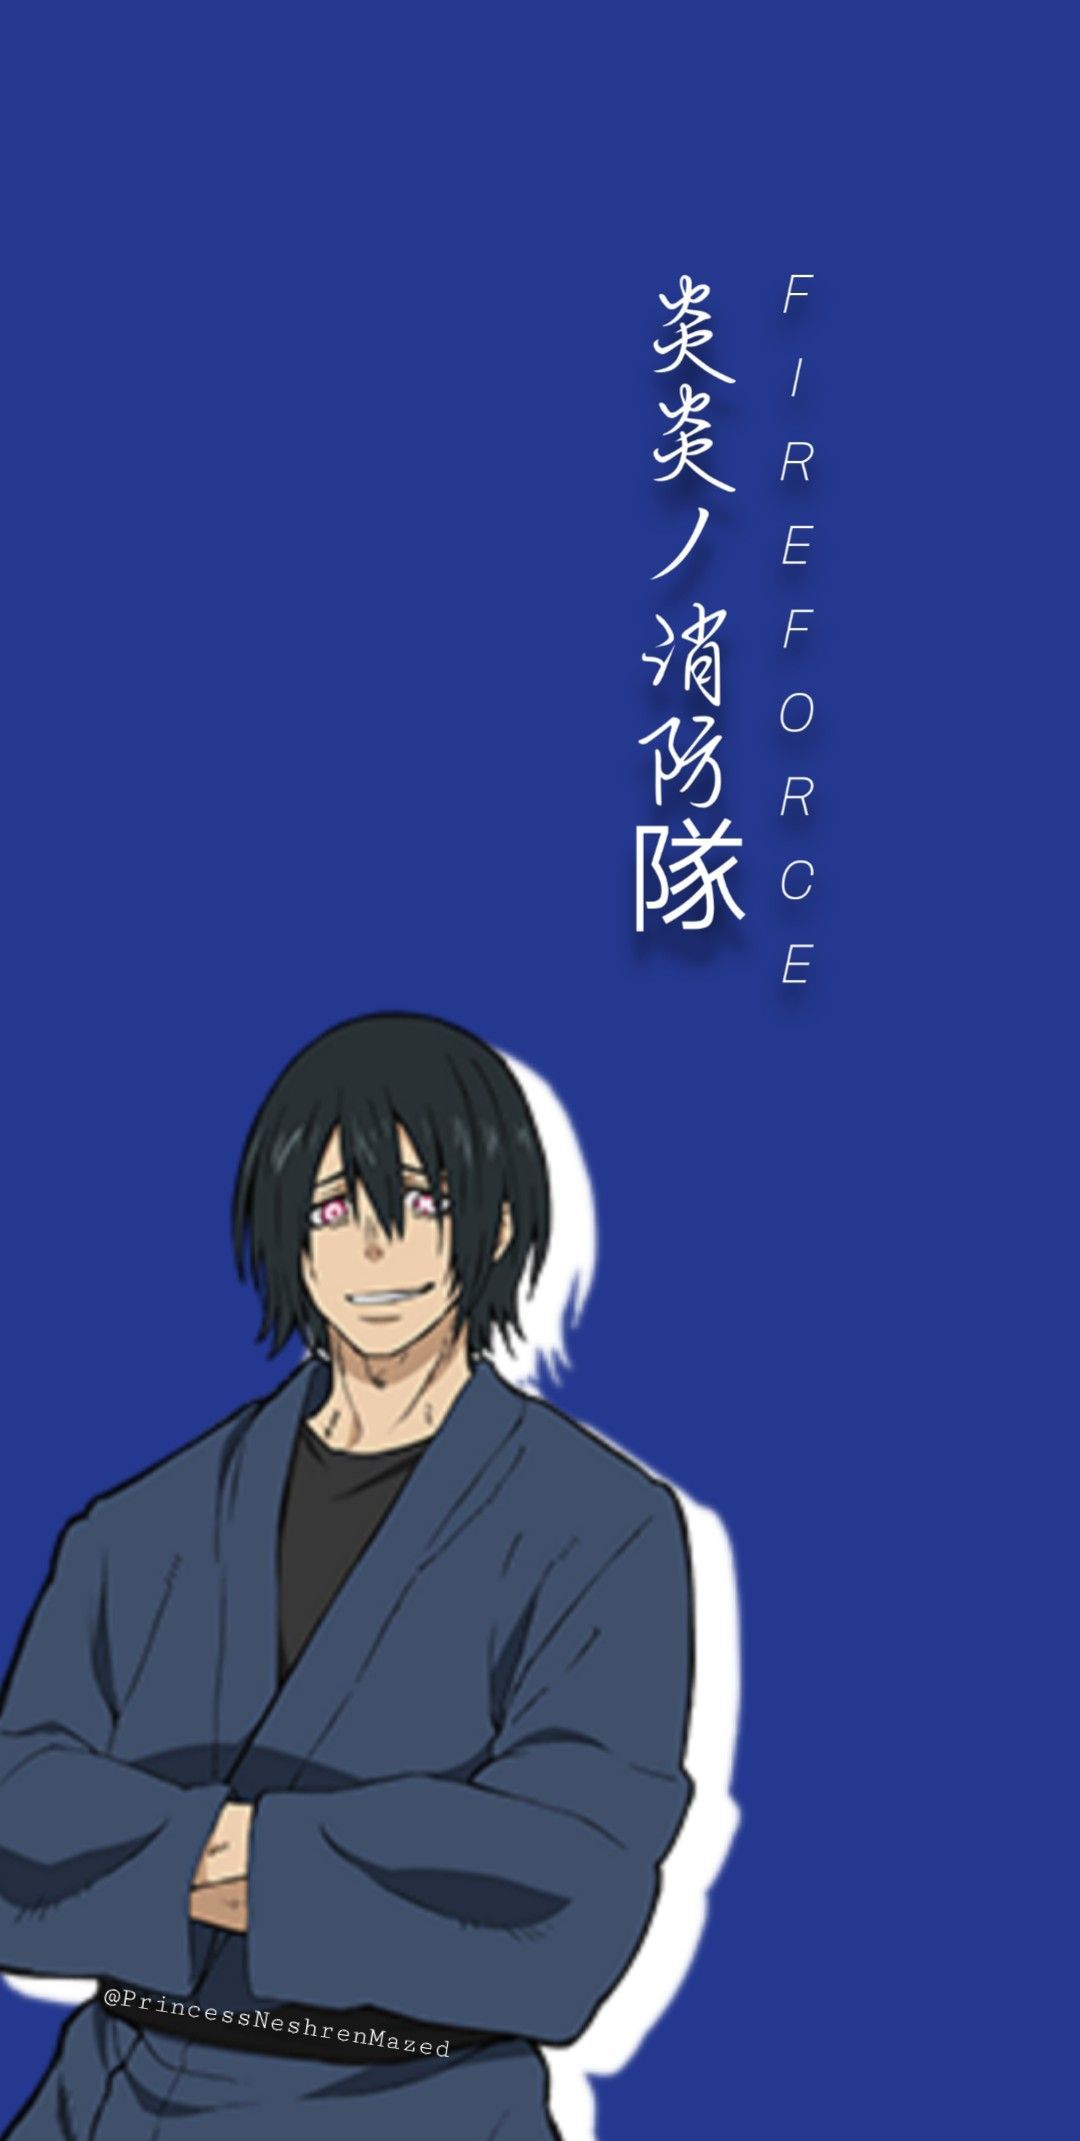 Fire Force (Shinmon Benimaru wallpaper). Anime, Anime background, Anime wallpaper